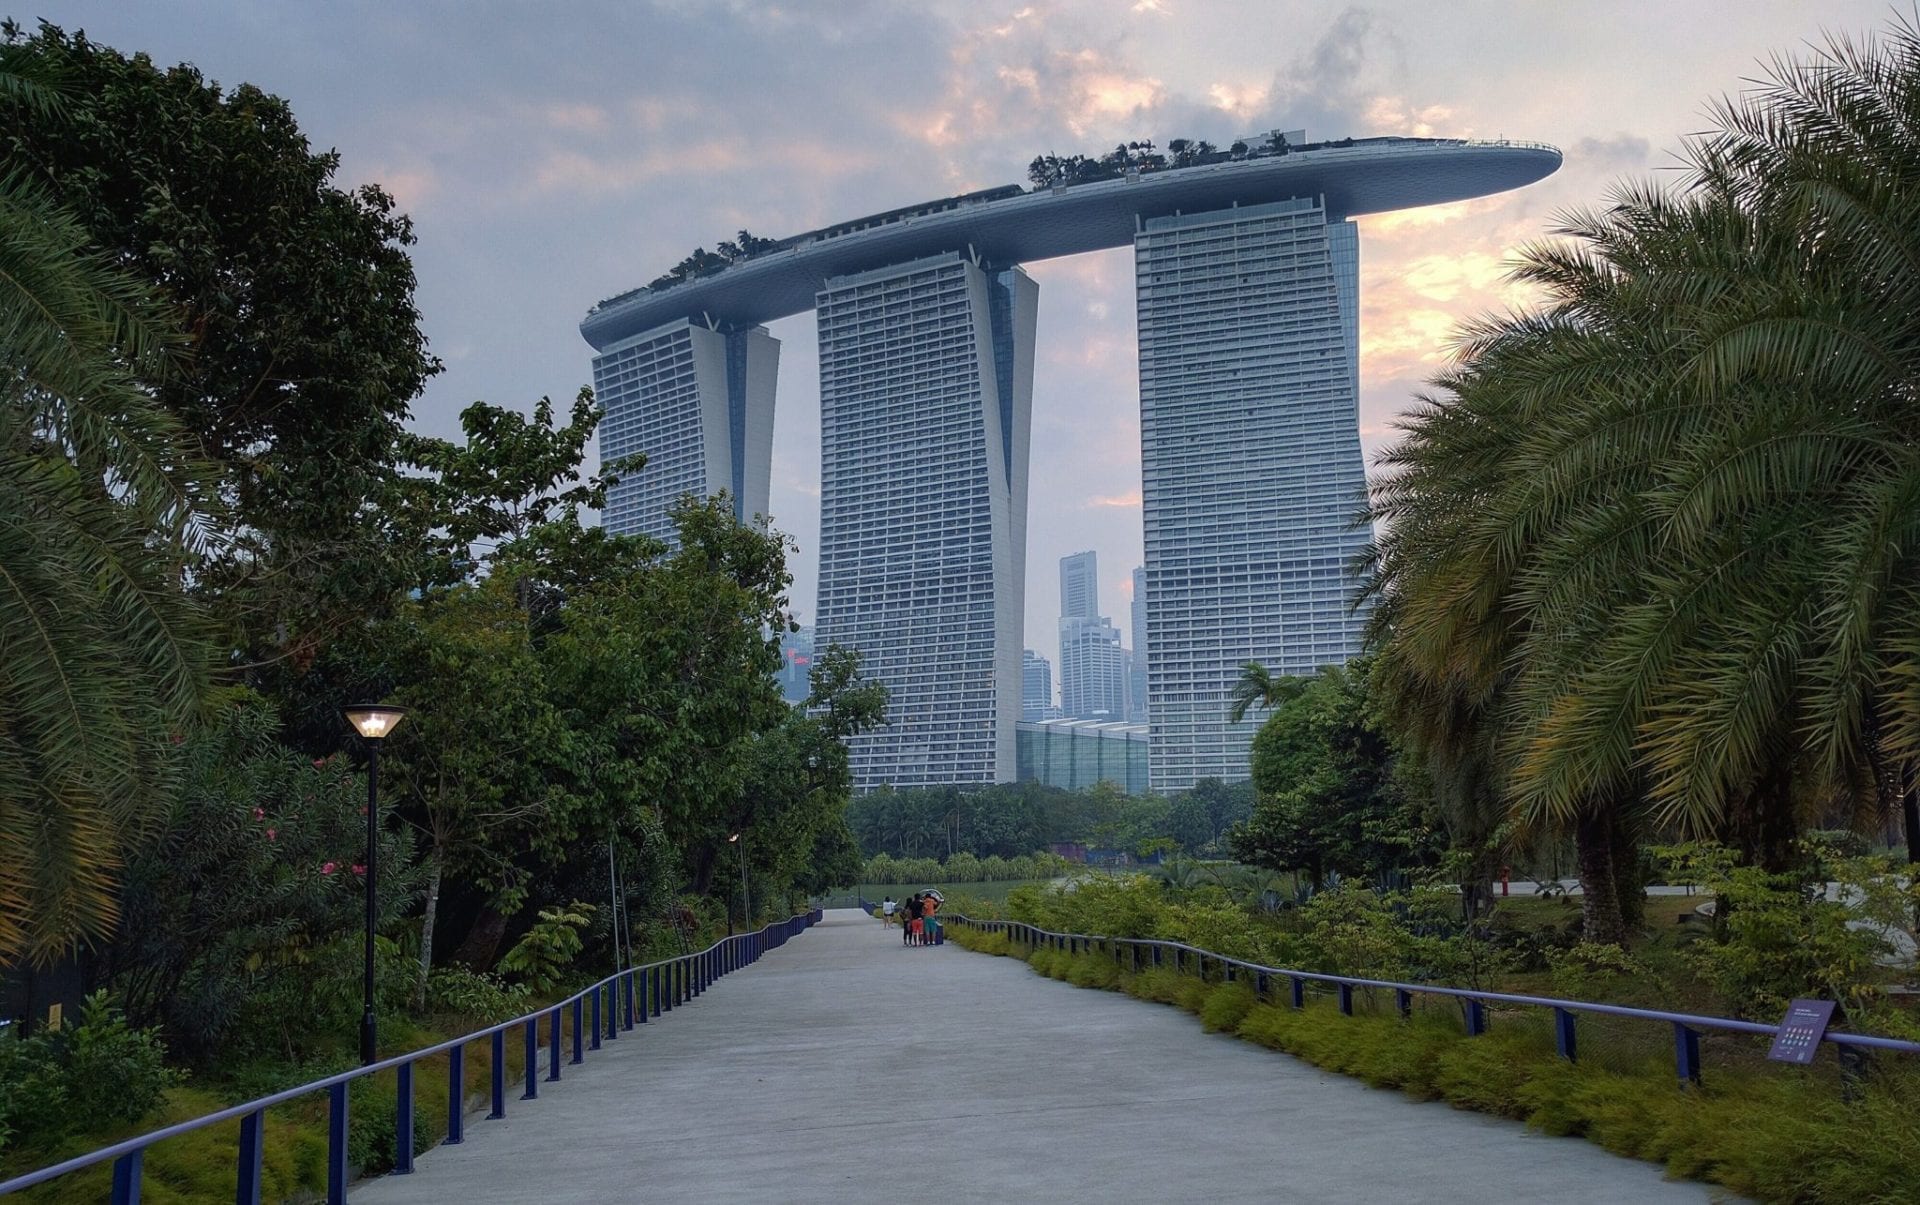 Singapur Marina Bay Sands / Gardens Of The Bay